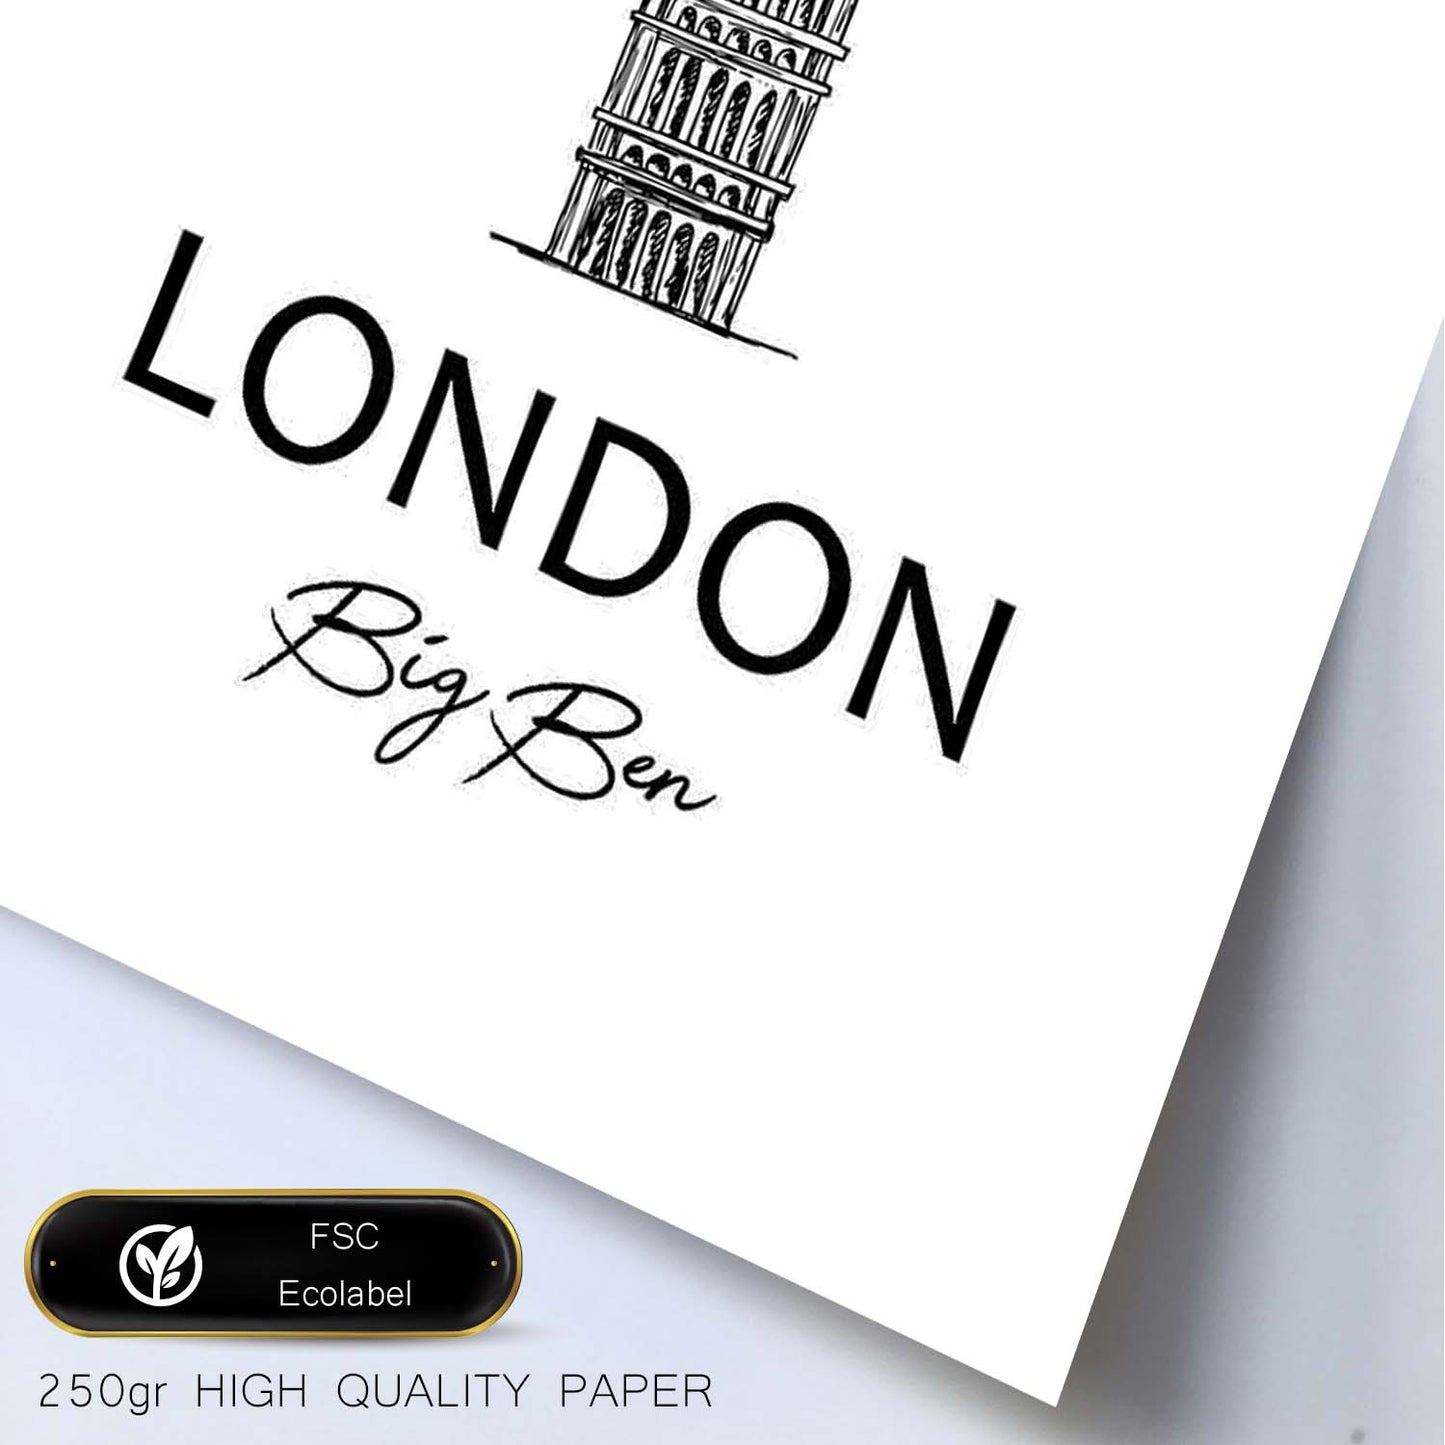 Poster de Londres - Big Ben. Láminas con monumentos de ciudades.-Artwork-Nacnic-Nacnic Estudio SL